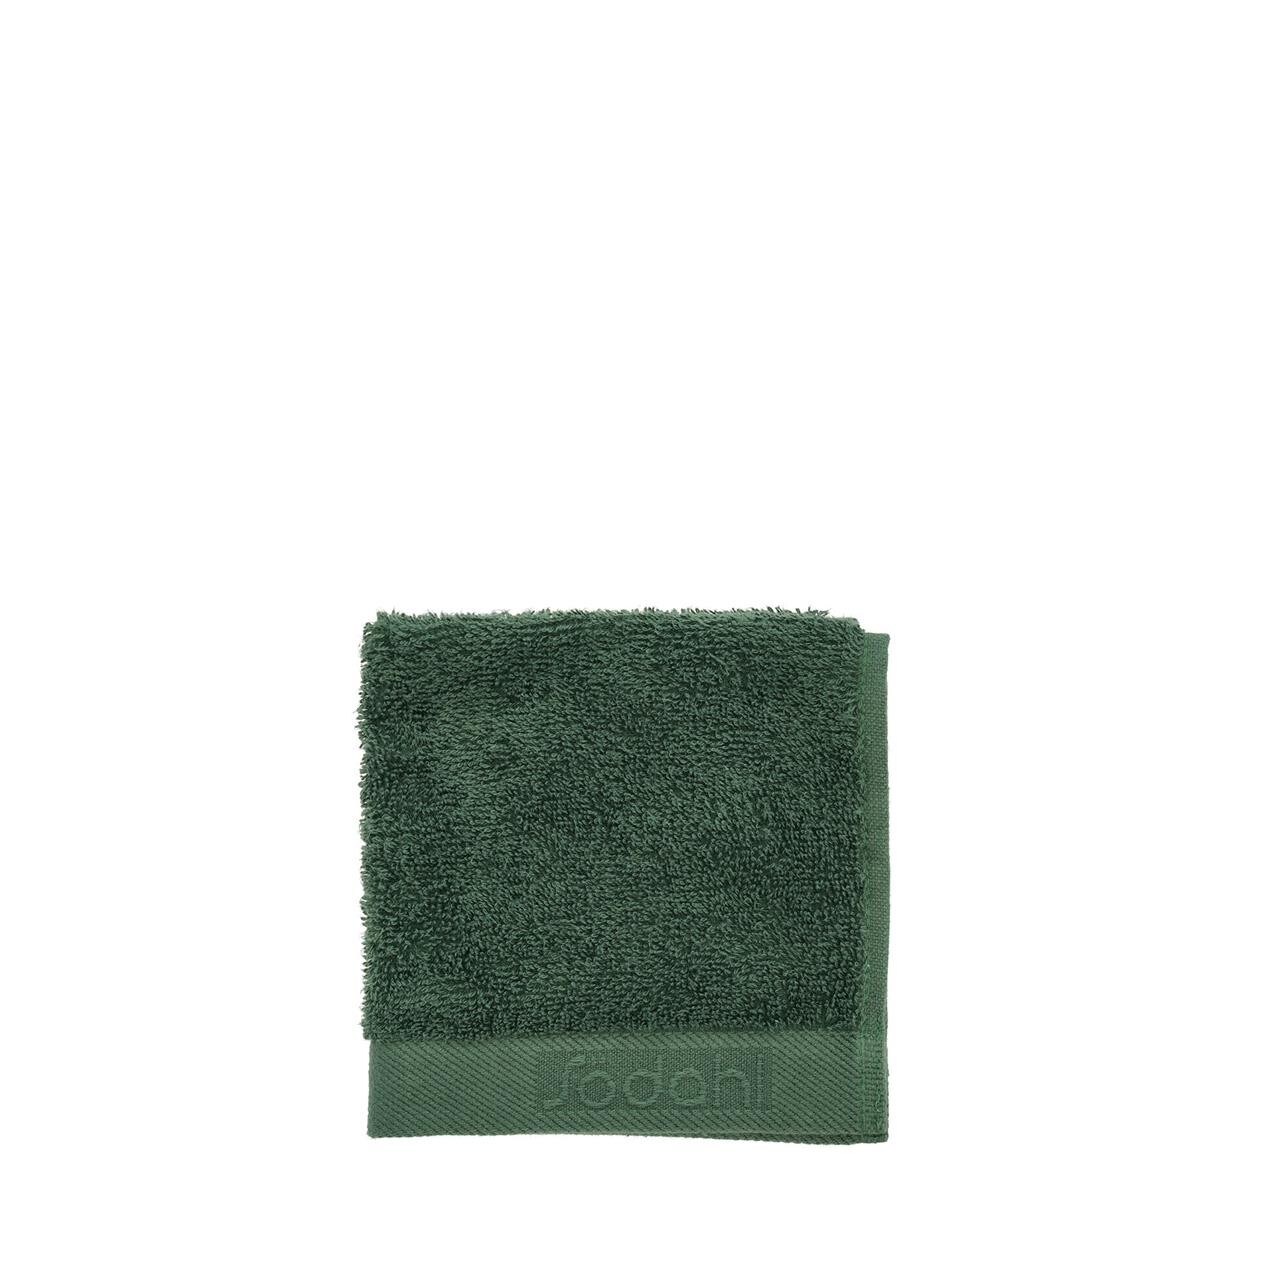 SÖDAHL Comfort vaskeklud 30×30 cm pine green